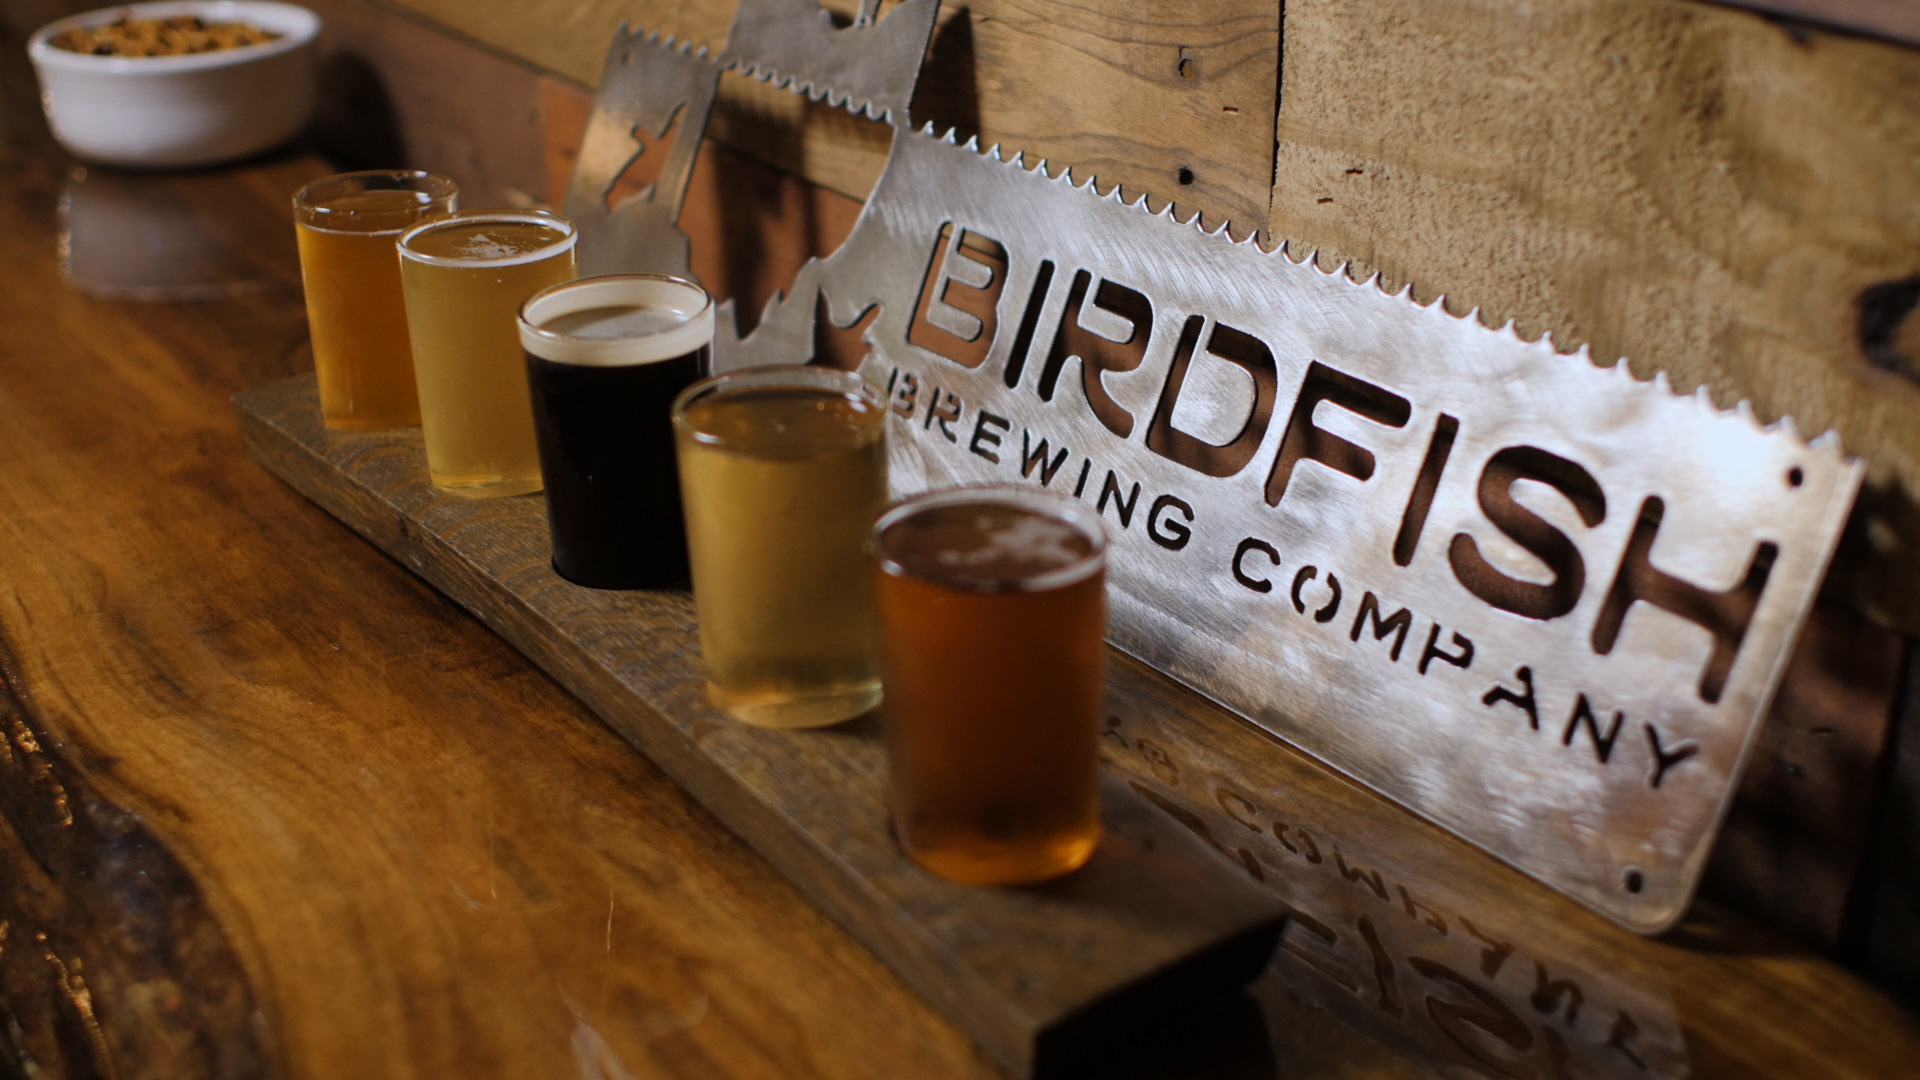 Birdfish Brewing Company